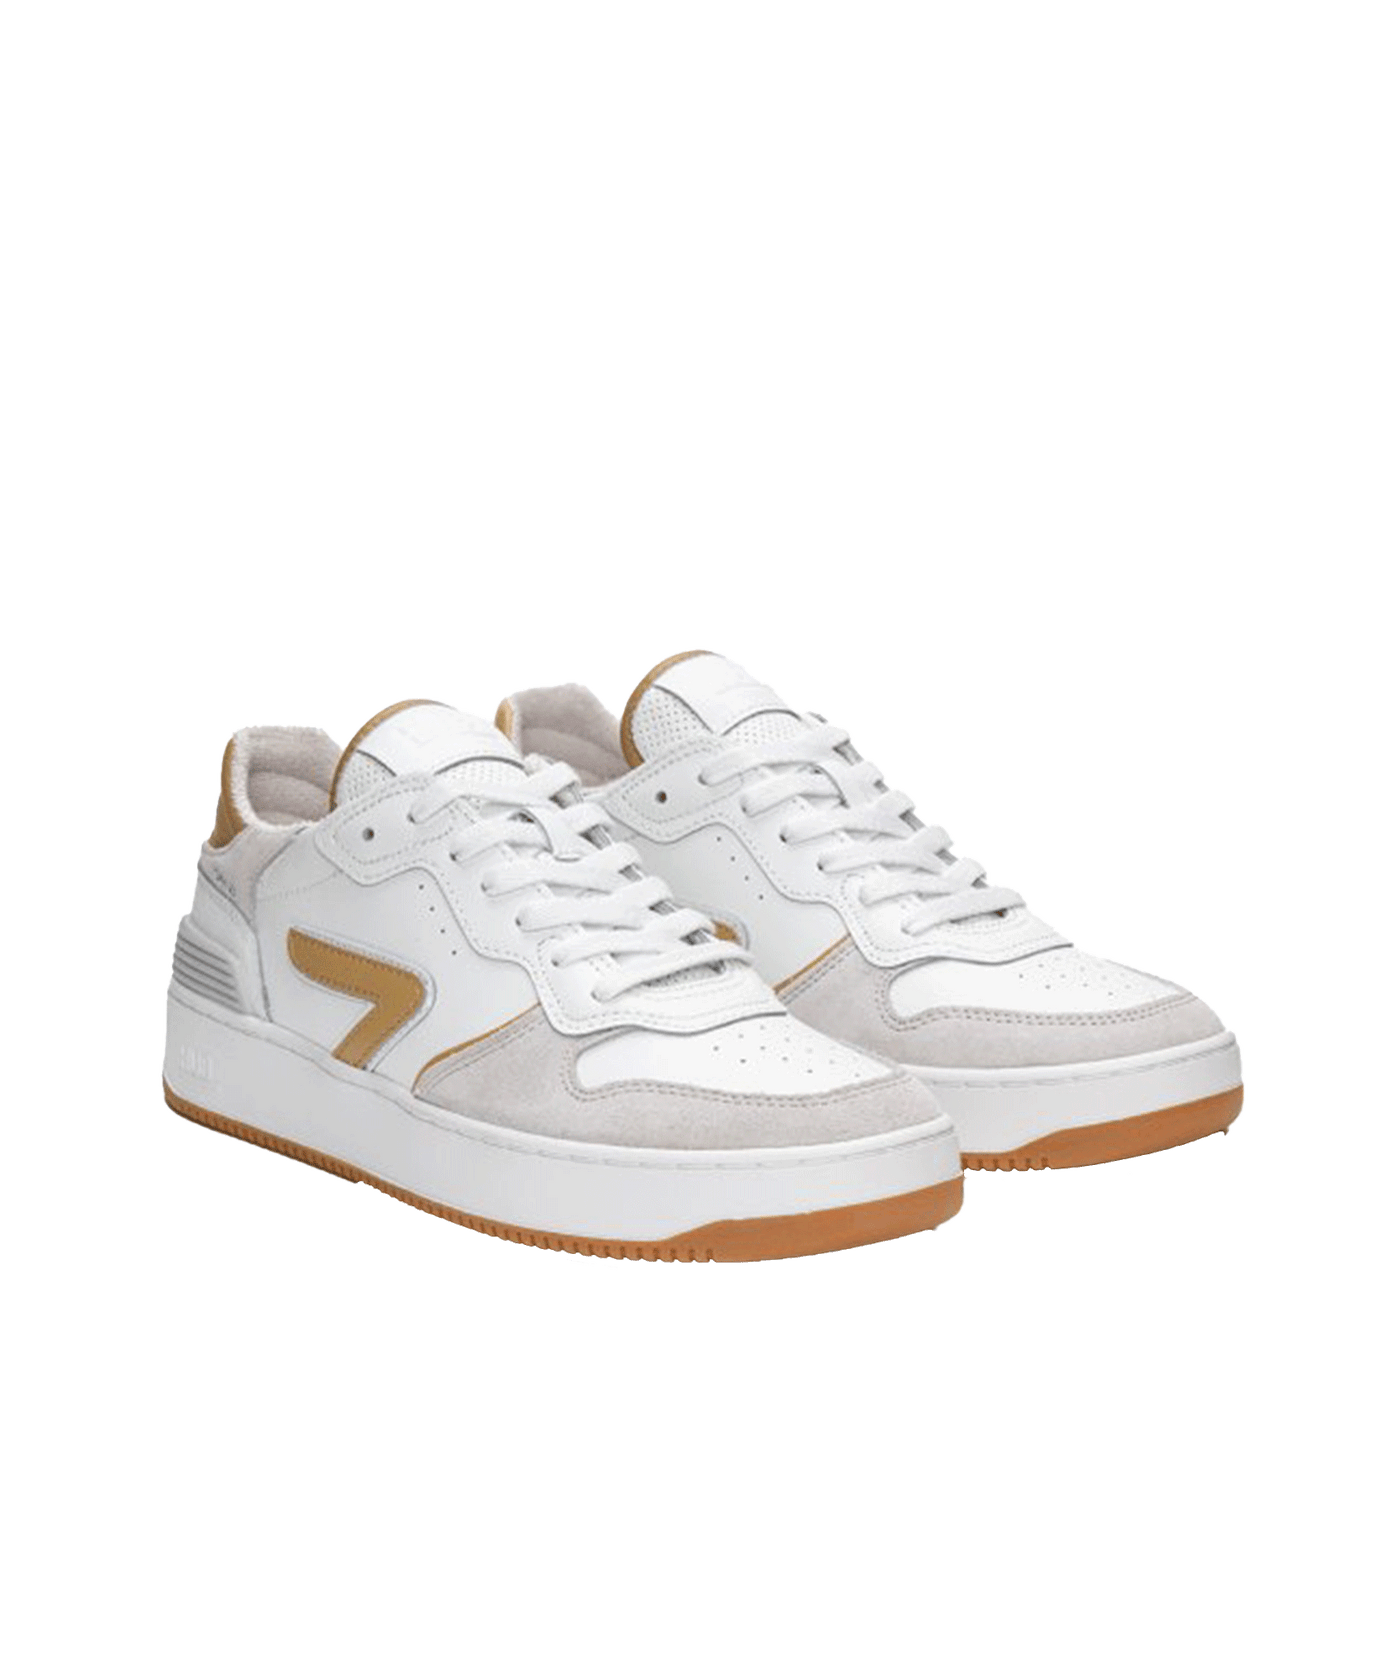 HUB Footwear - Smash L68 - White/brown